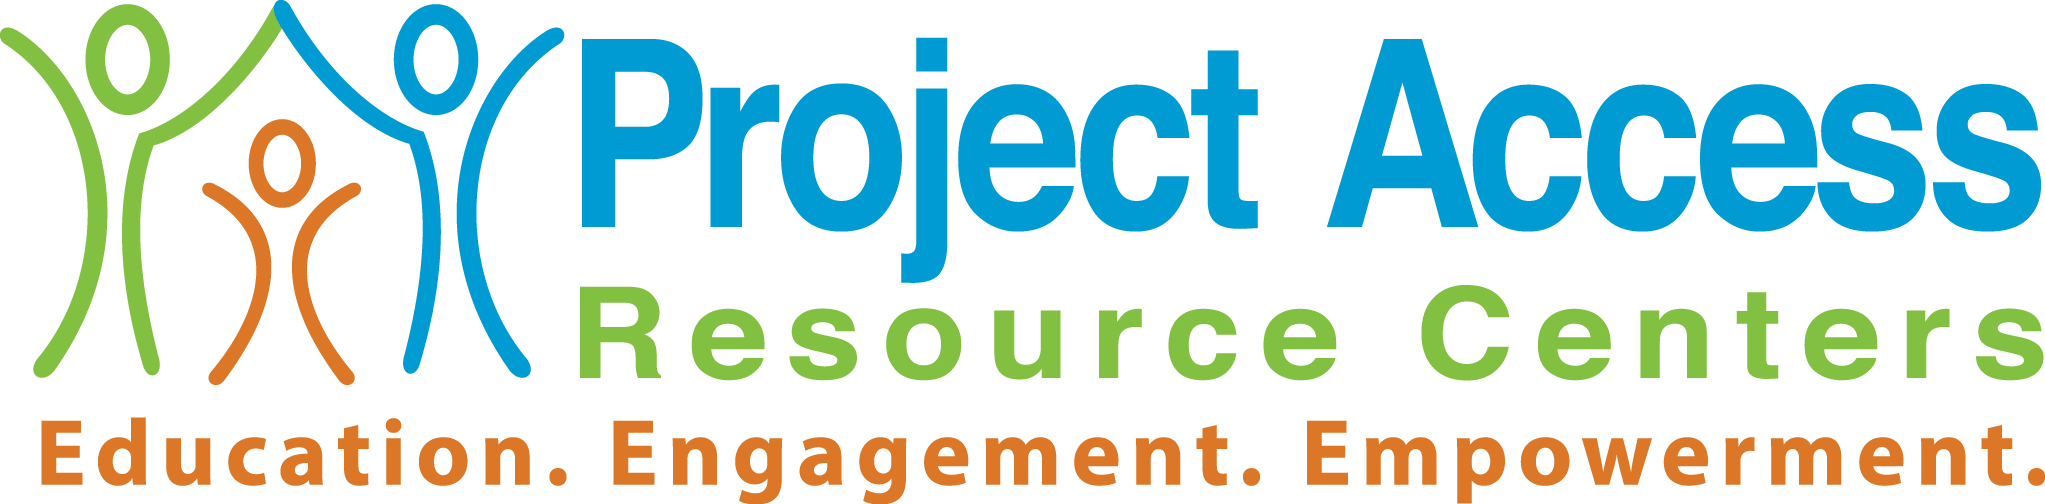 Project Access Resource Center logo. Education. Engagement. Empowerment.